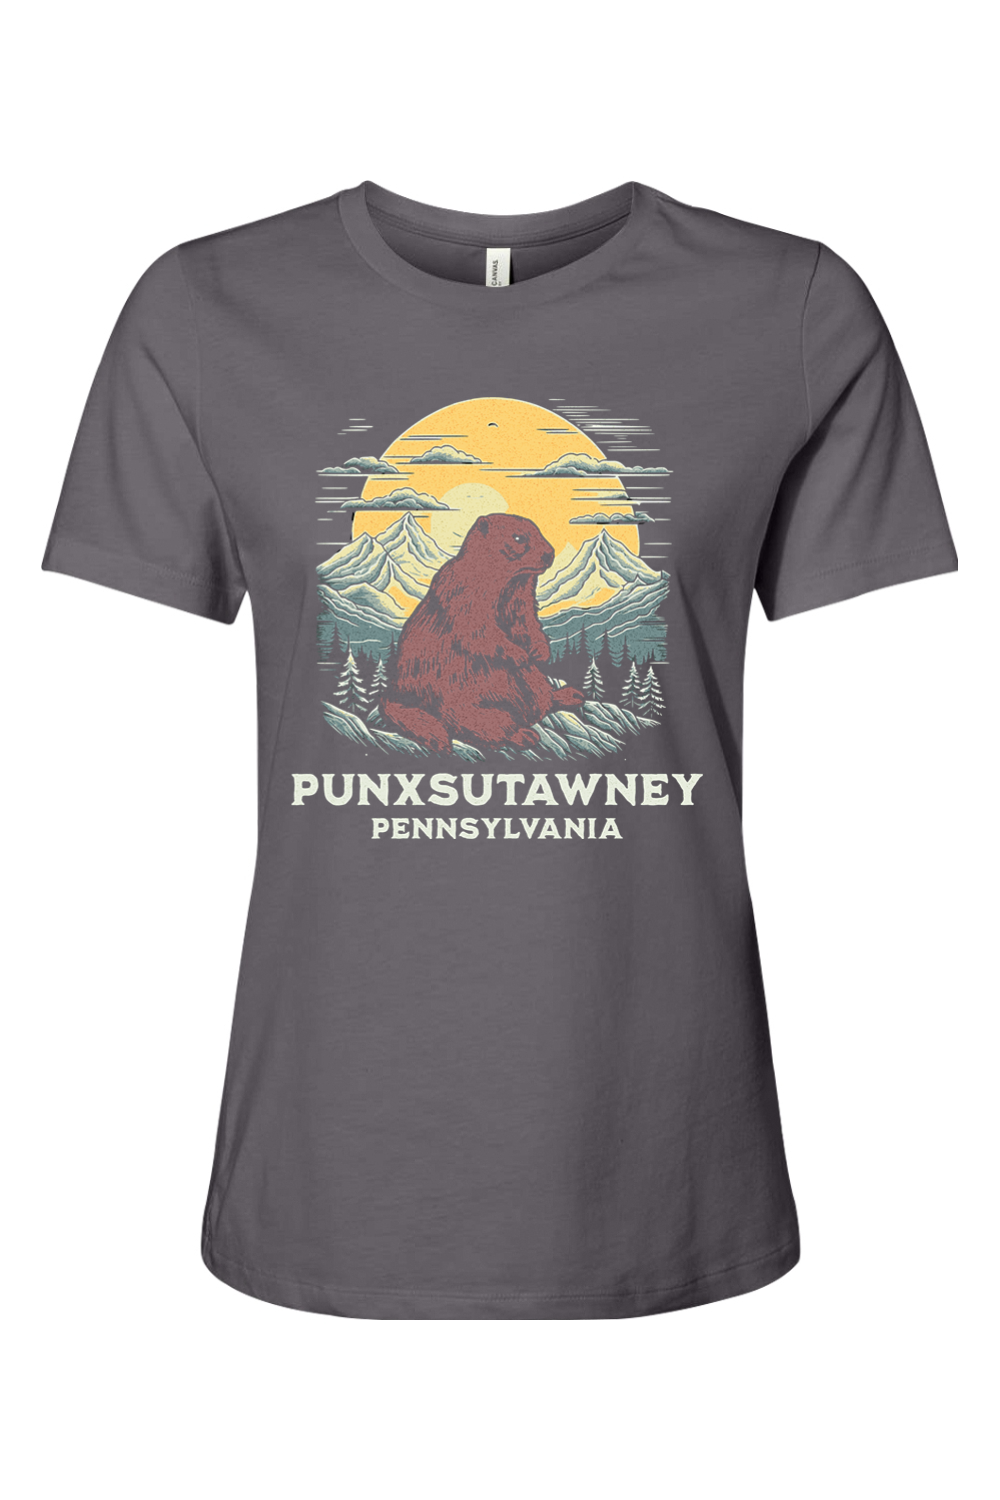 Punxsutawney Pennsylvania - Ladies Tee - Yinzylvania